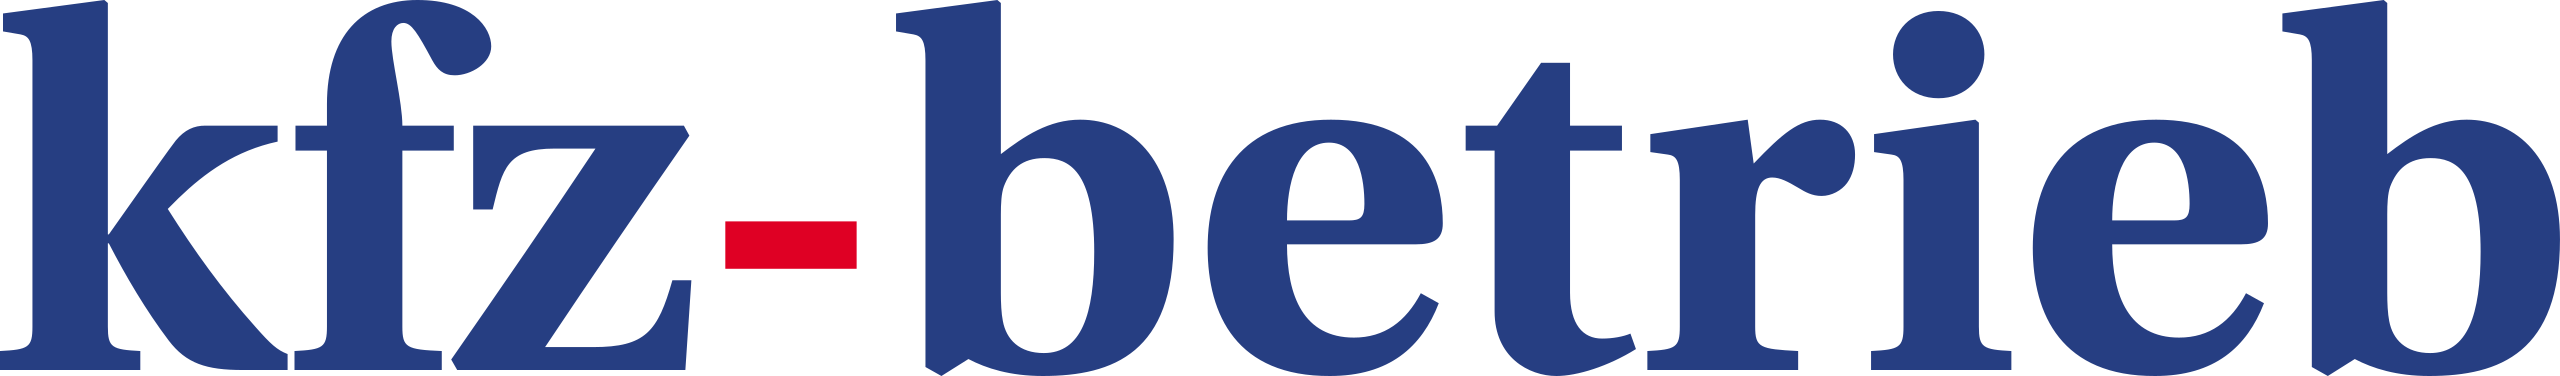 logo-kfz-betrieb